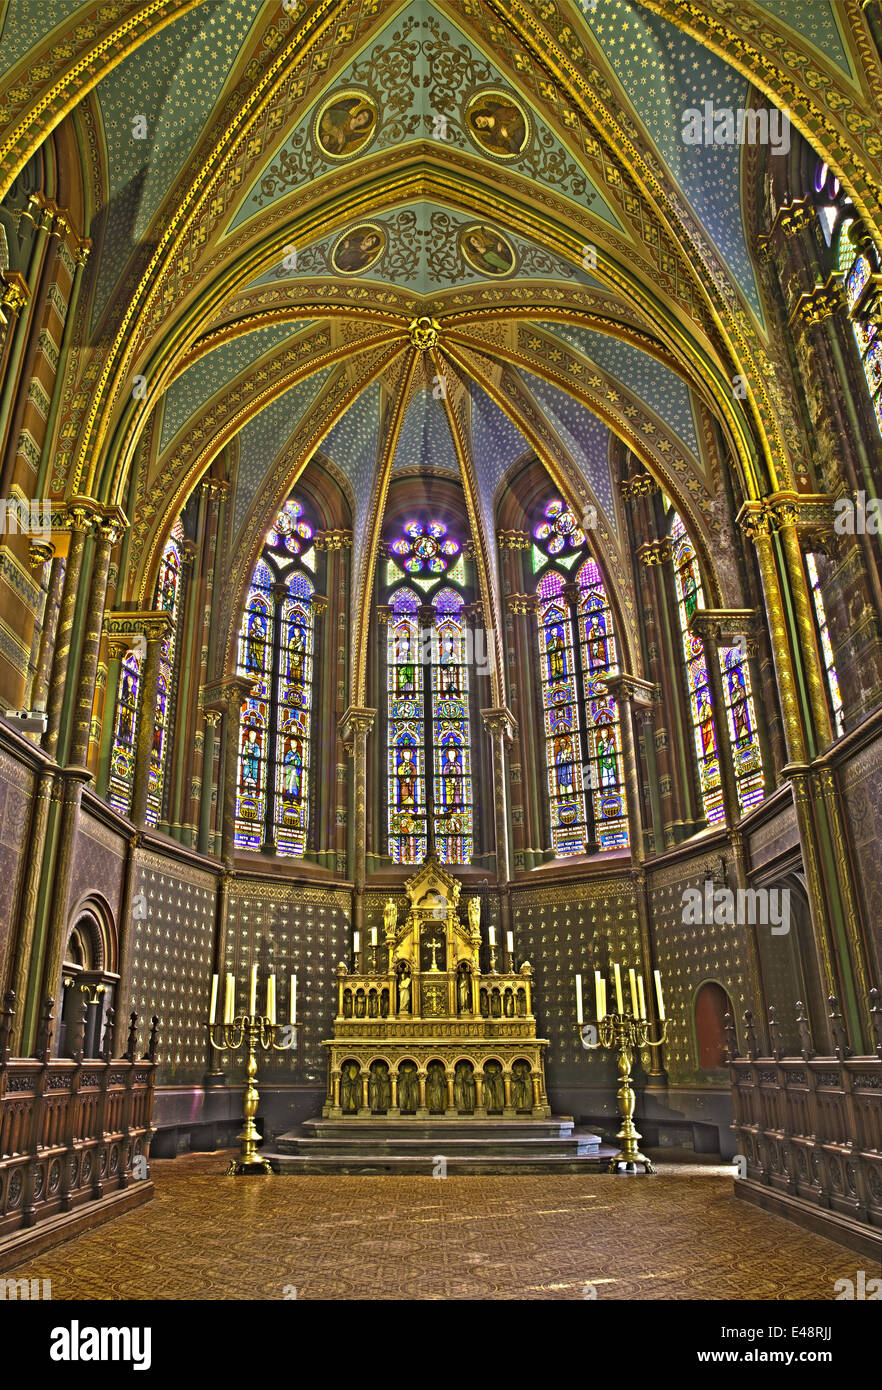 BRUSSELS, BELGIUM - JUNE 15, 2014: The presbyter of the gothic church Notre Dame de la Chapelle. Stock Photo